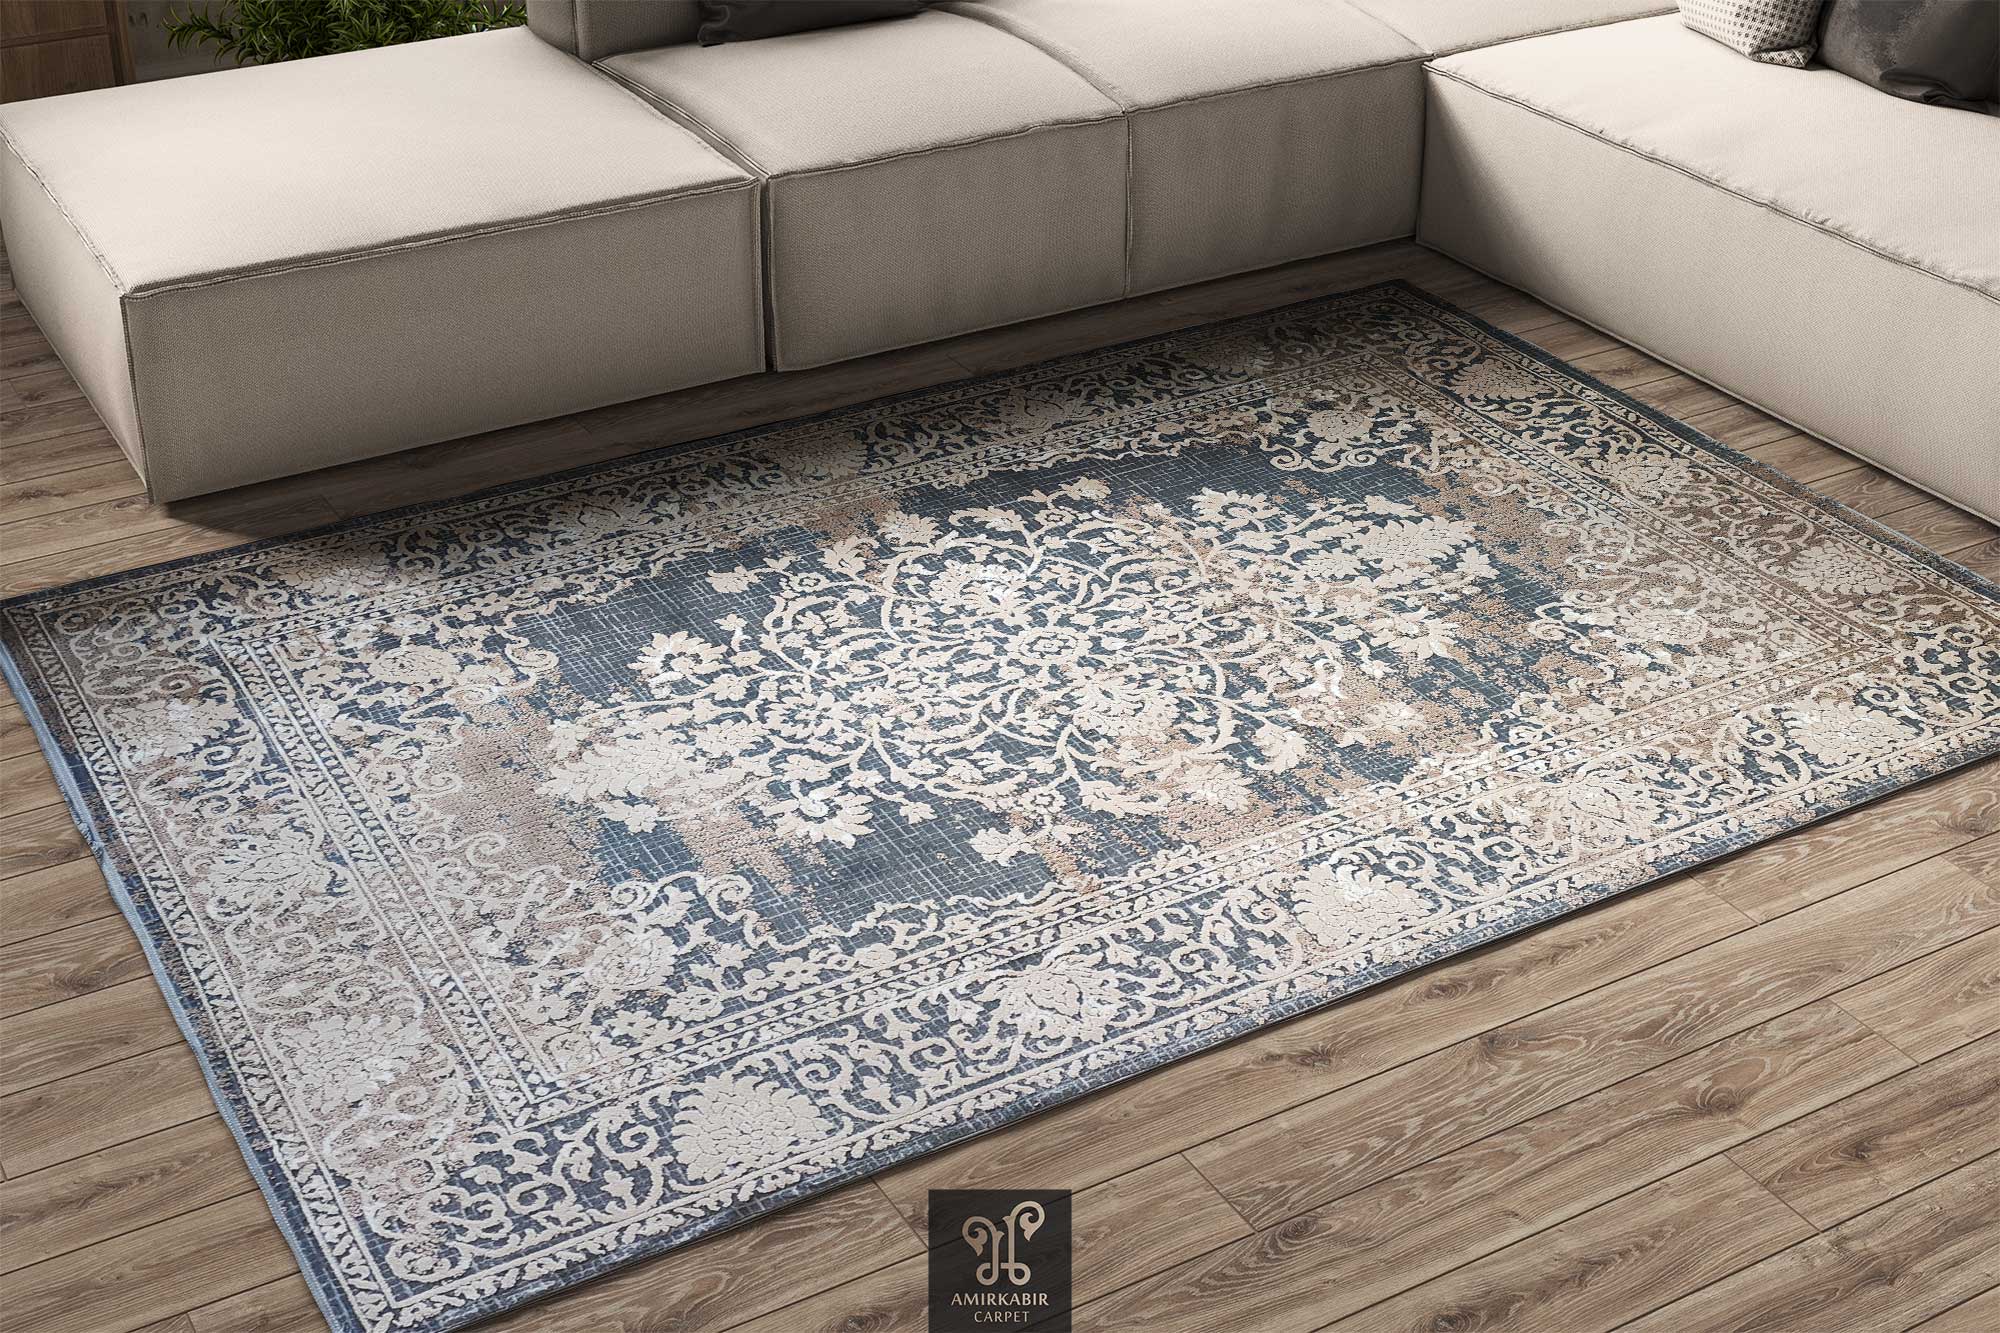 Vintage 400 reeds carpet -1400 Density RUG - Modern Carpet - Harmony Carpet 1188 Silver